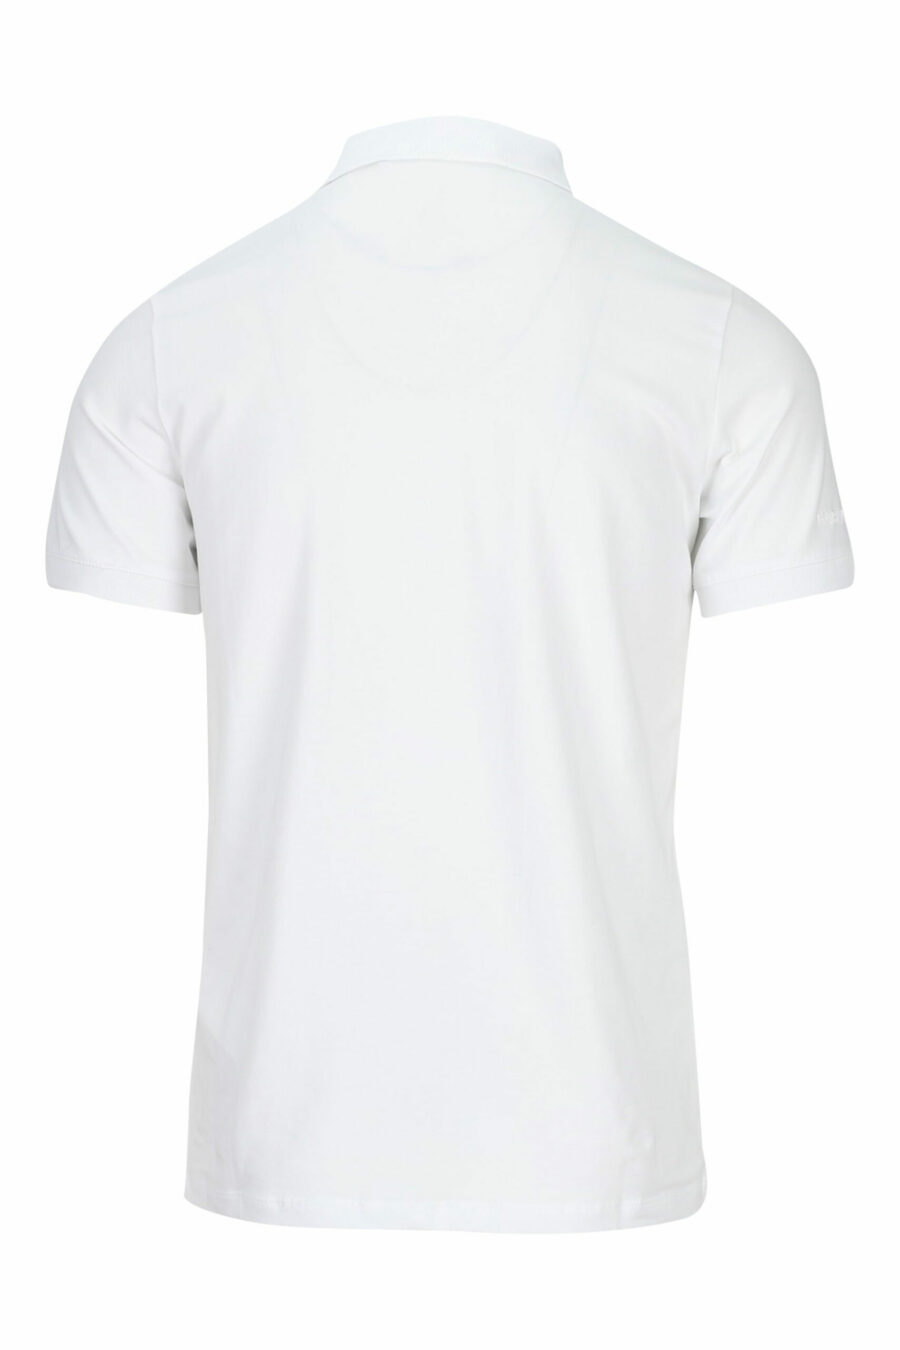 Weißes Poloshirt mit monochromem Mini-Logo - 4062226398312 1 skaliert